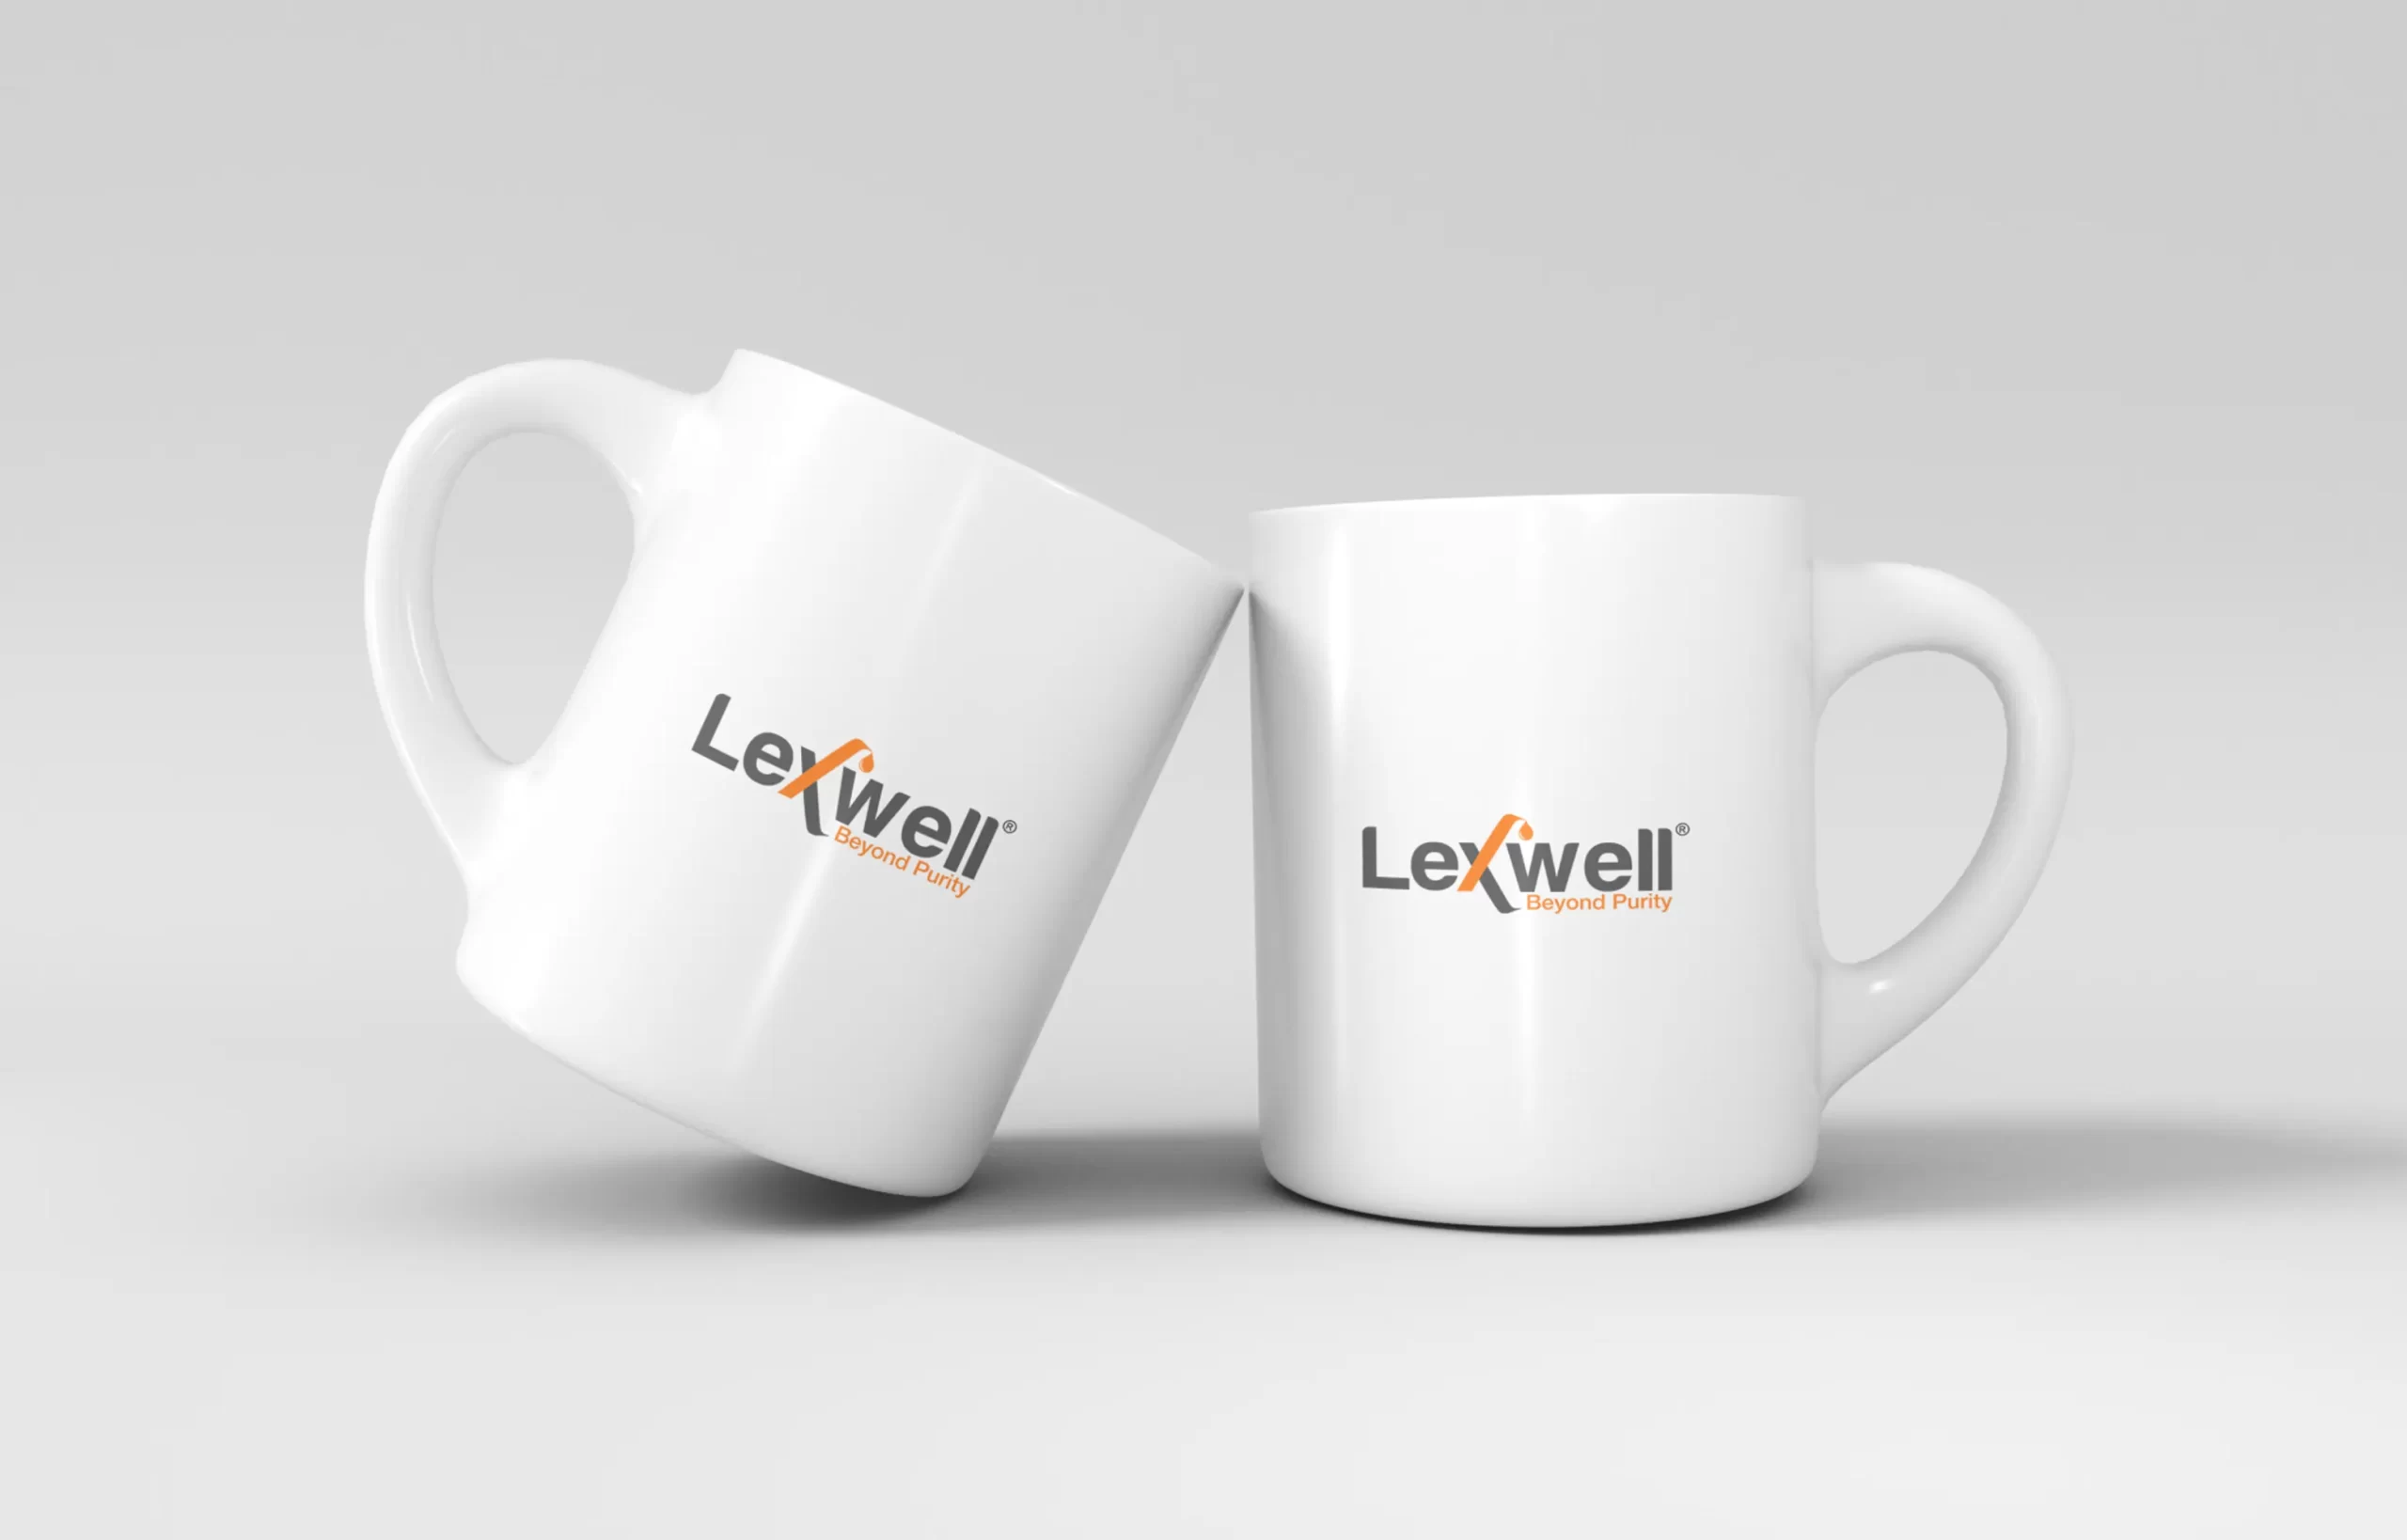 brand essentials Chhattisgarh Infotech Promotion Society mug lexwell merchandise scaled